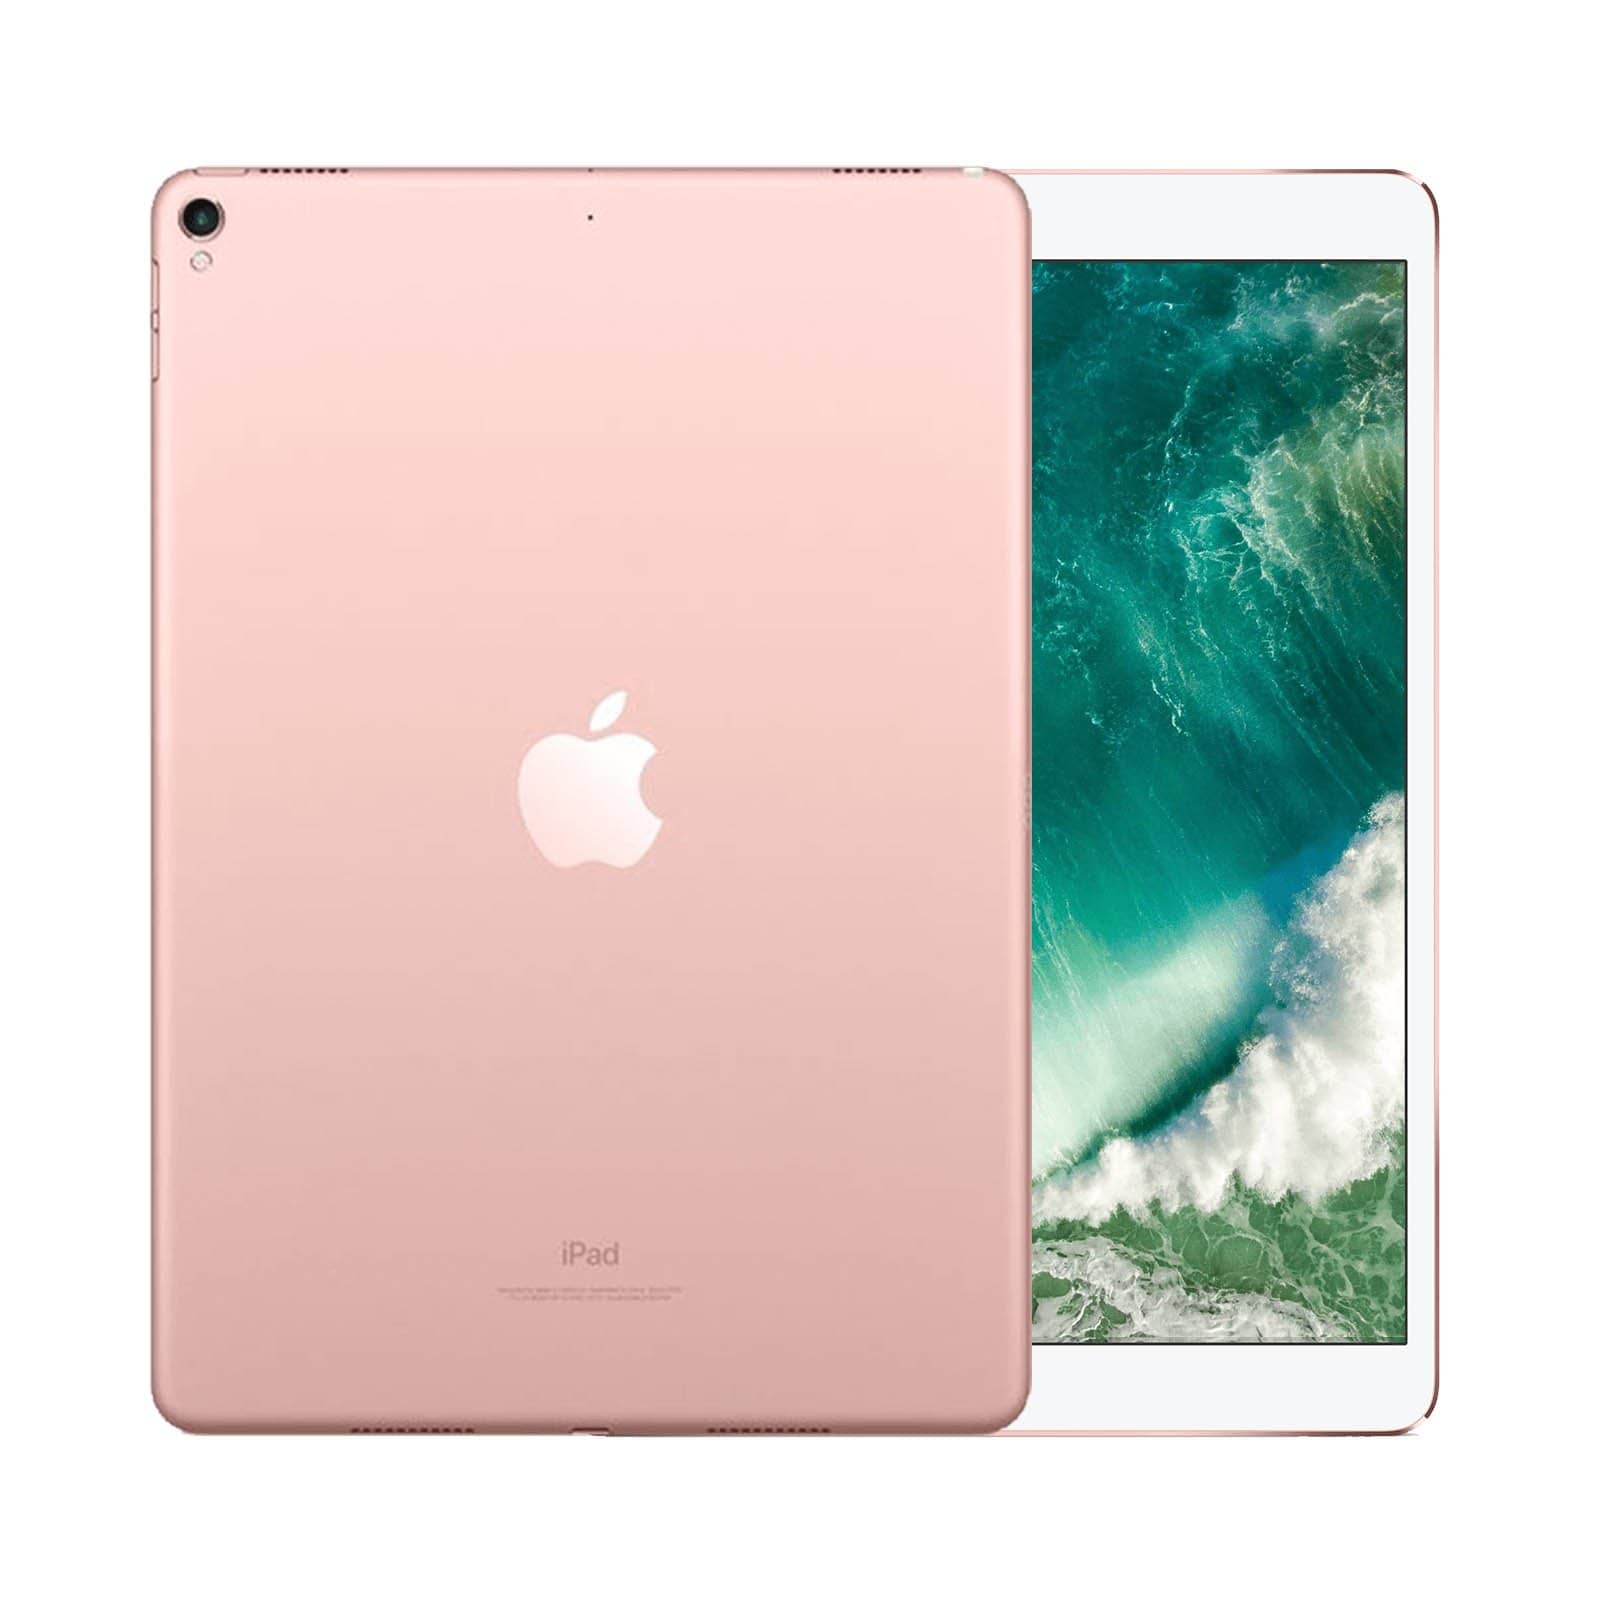 iPad Pro 10.5 Inch 512GB Rose Gold Pristine - WiFi 512GB Rose Gold Pristine